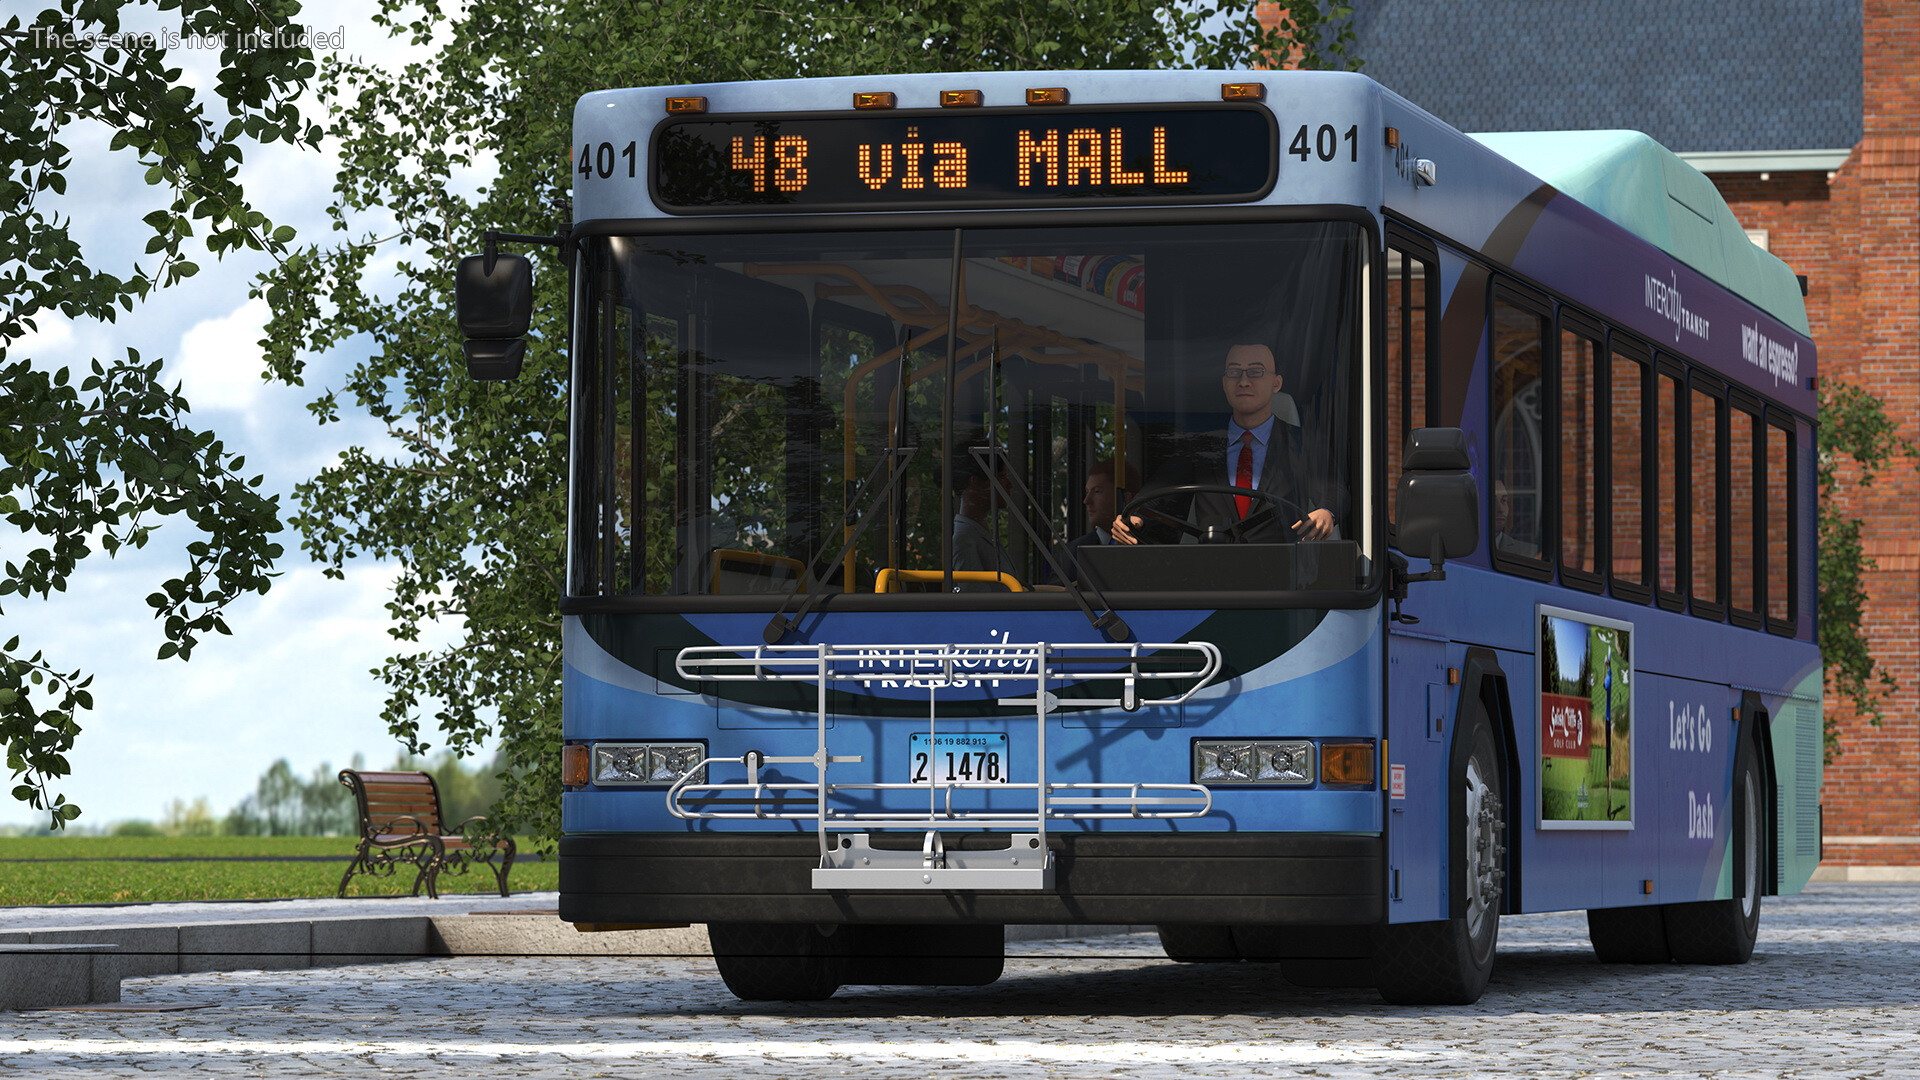 3D model Bus Marcopolo Viaggio G4 800 VR / AR / low-poly